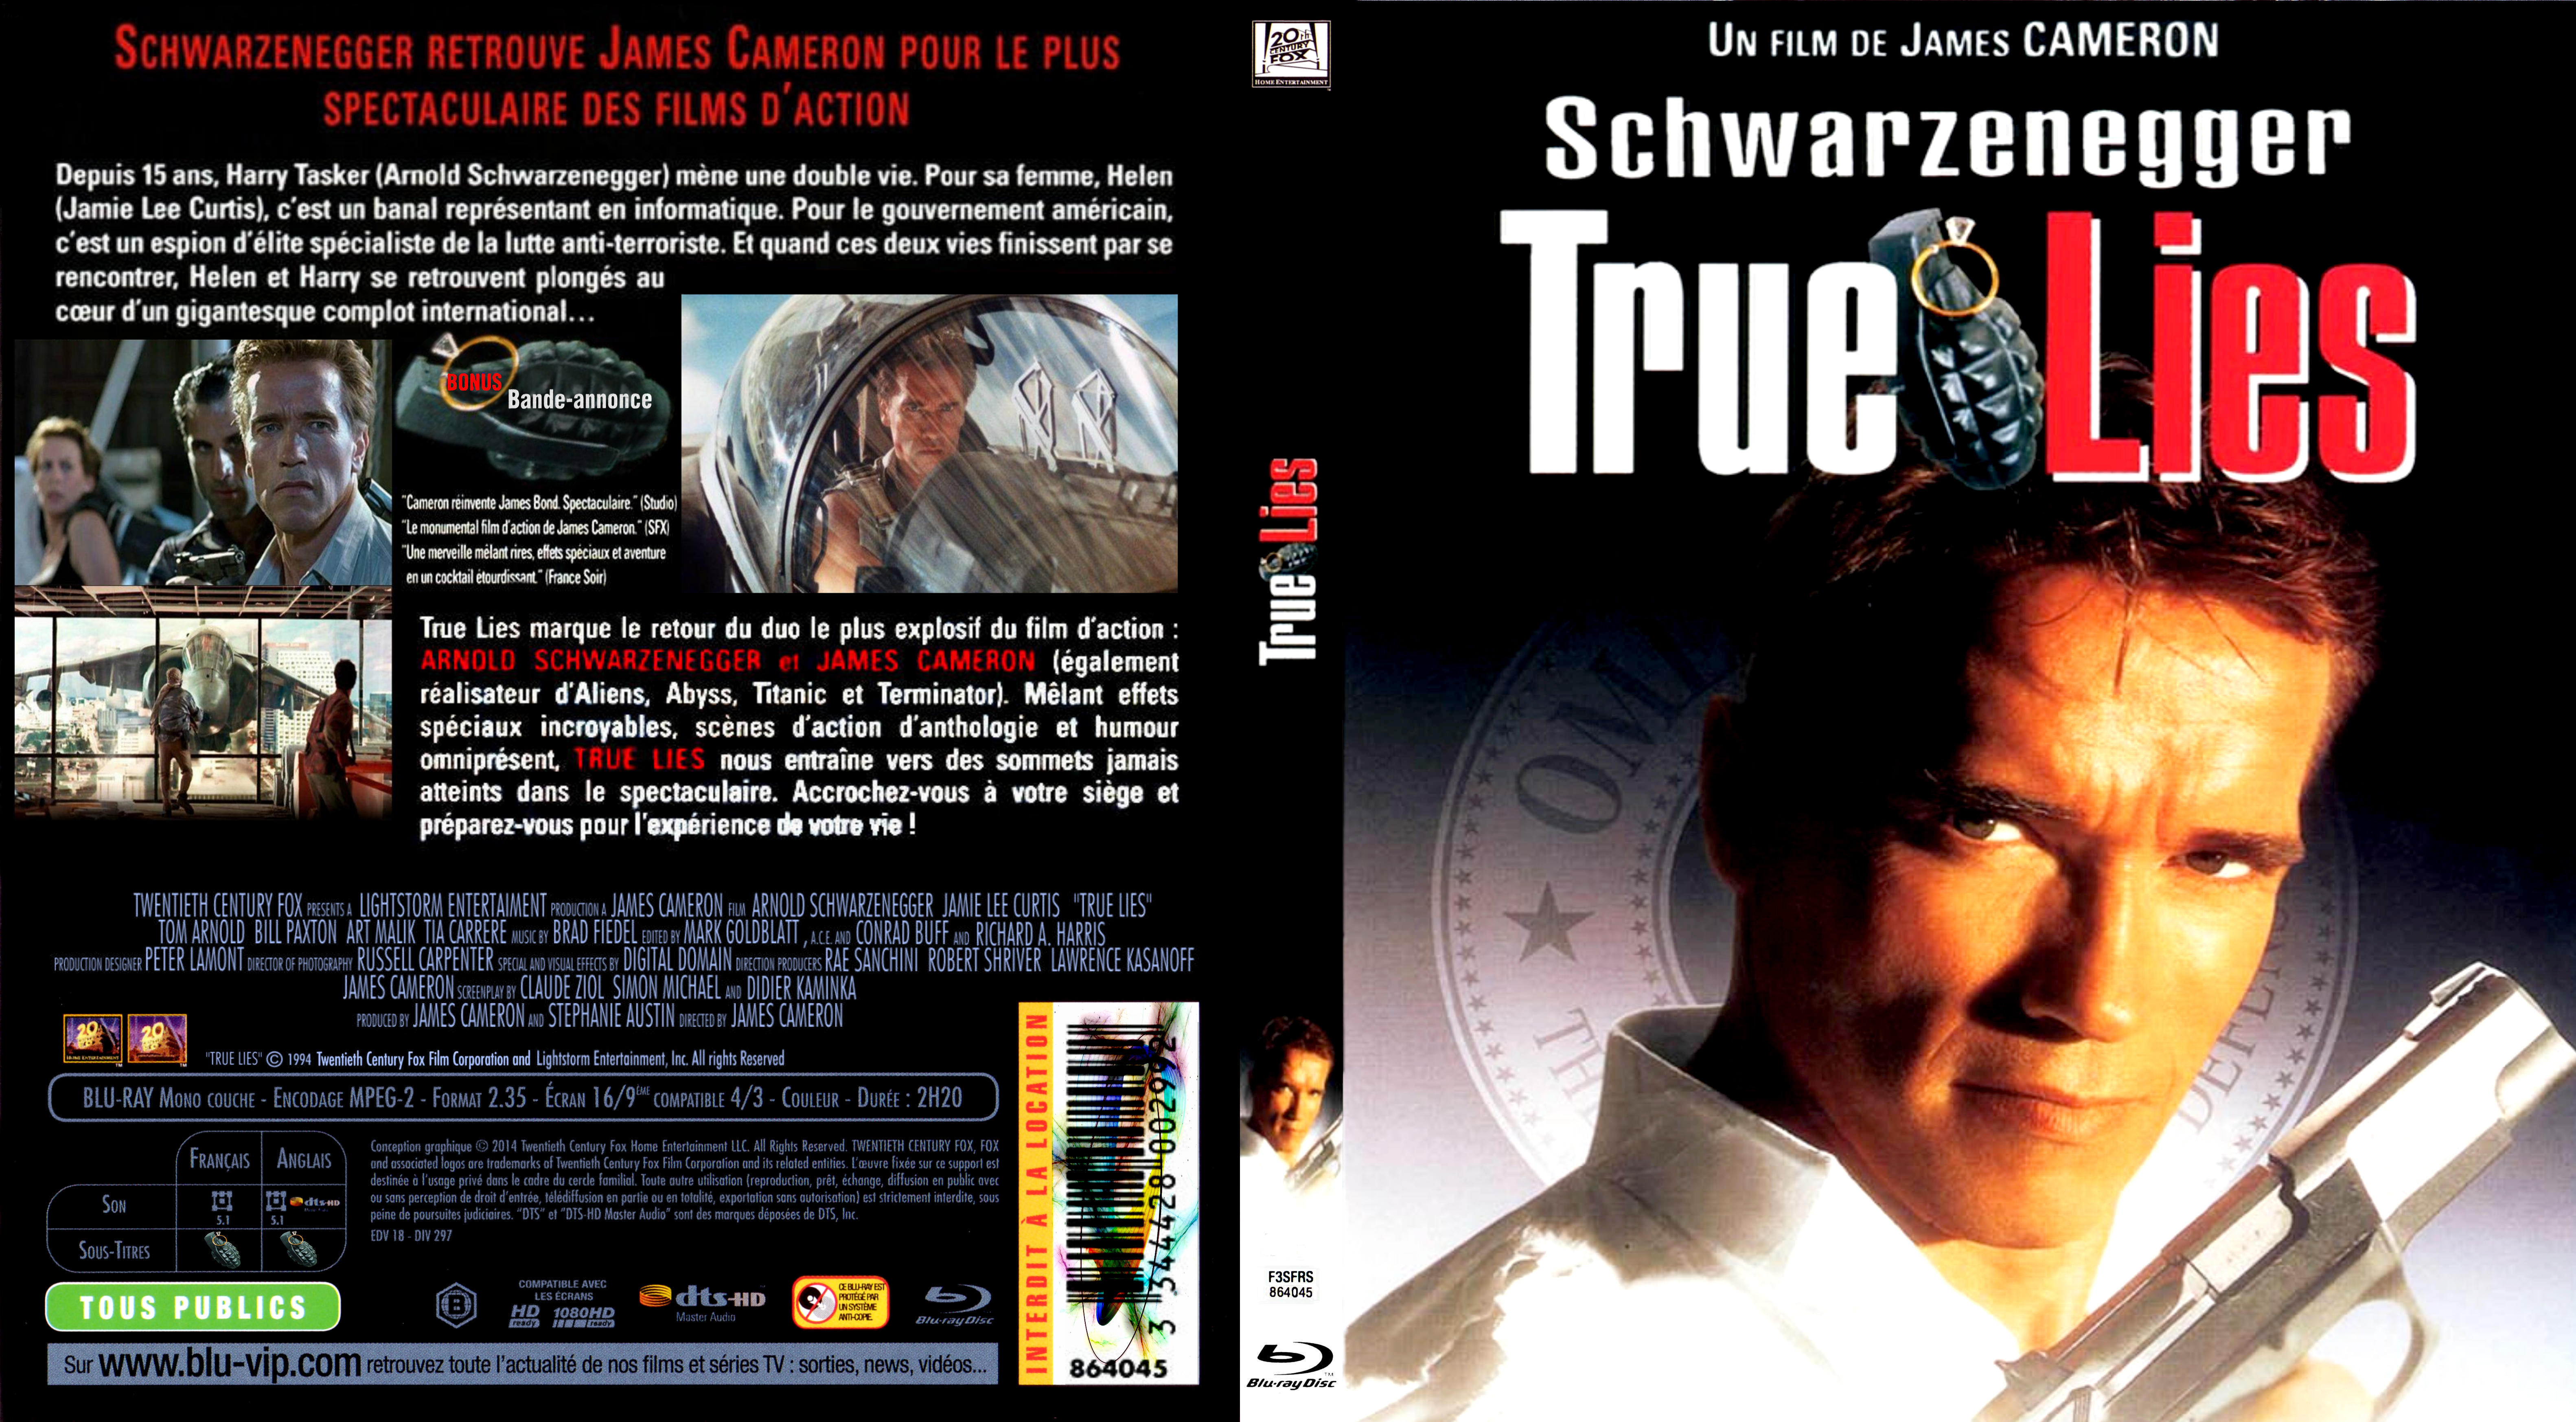 Jaquette DVD True lies custom (BLU-RAY)